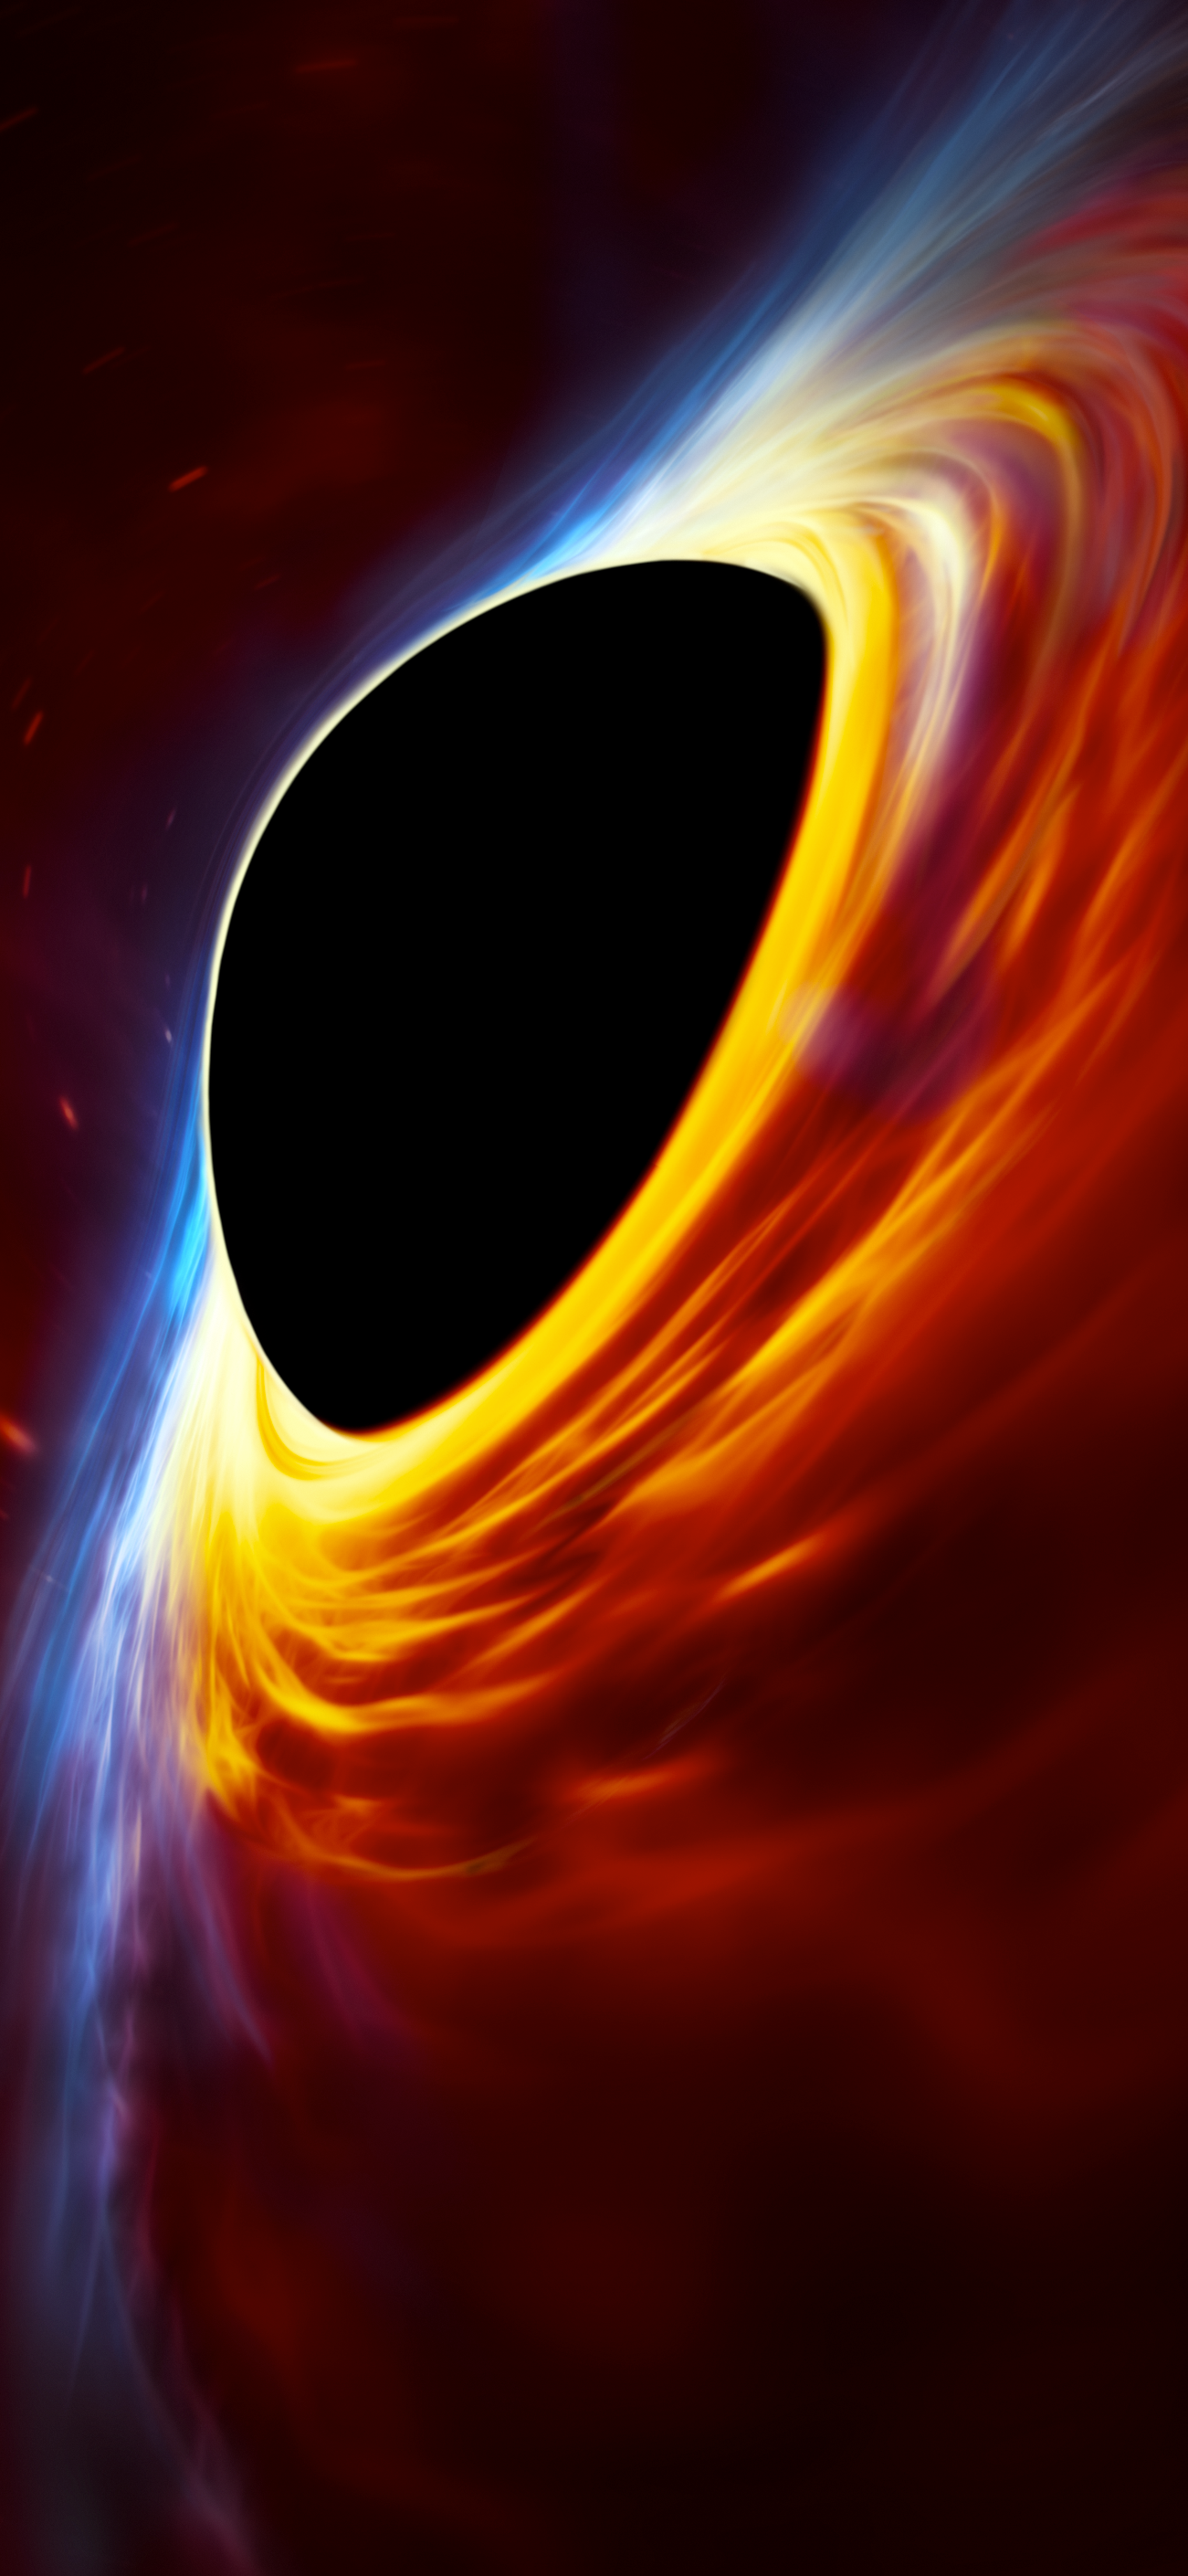 Black hole. Black hole wallpaper, Black hole, Space phone wallpaper